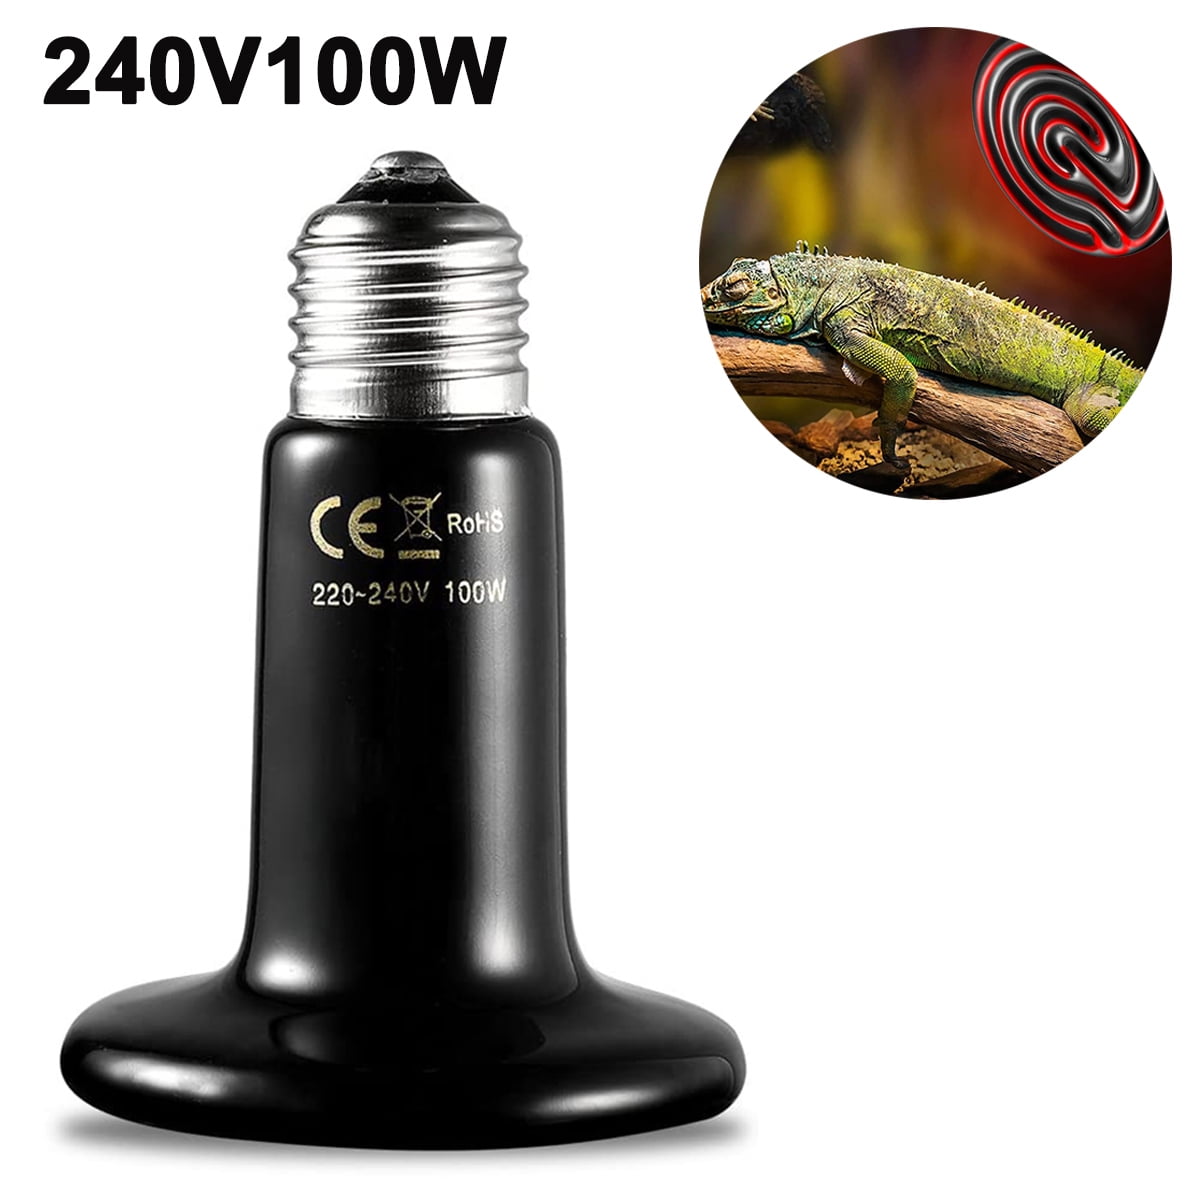 250W 110V CERAMIC HEAT EMITTER BROODER INFRARED LAMP BULB REPTILE PET COOP GROW 